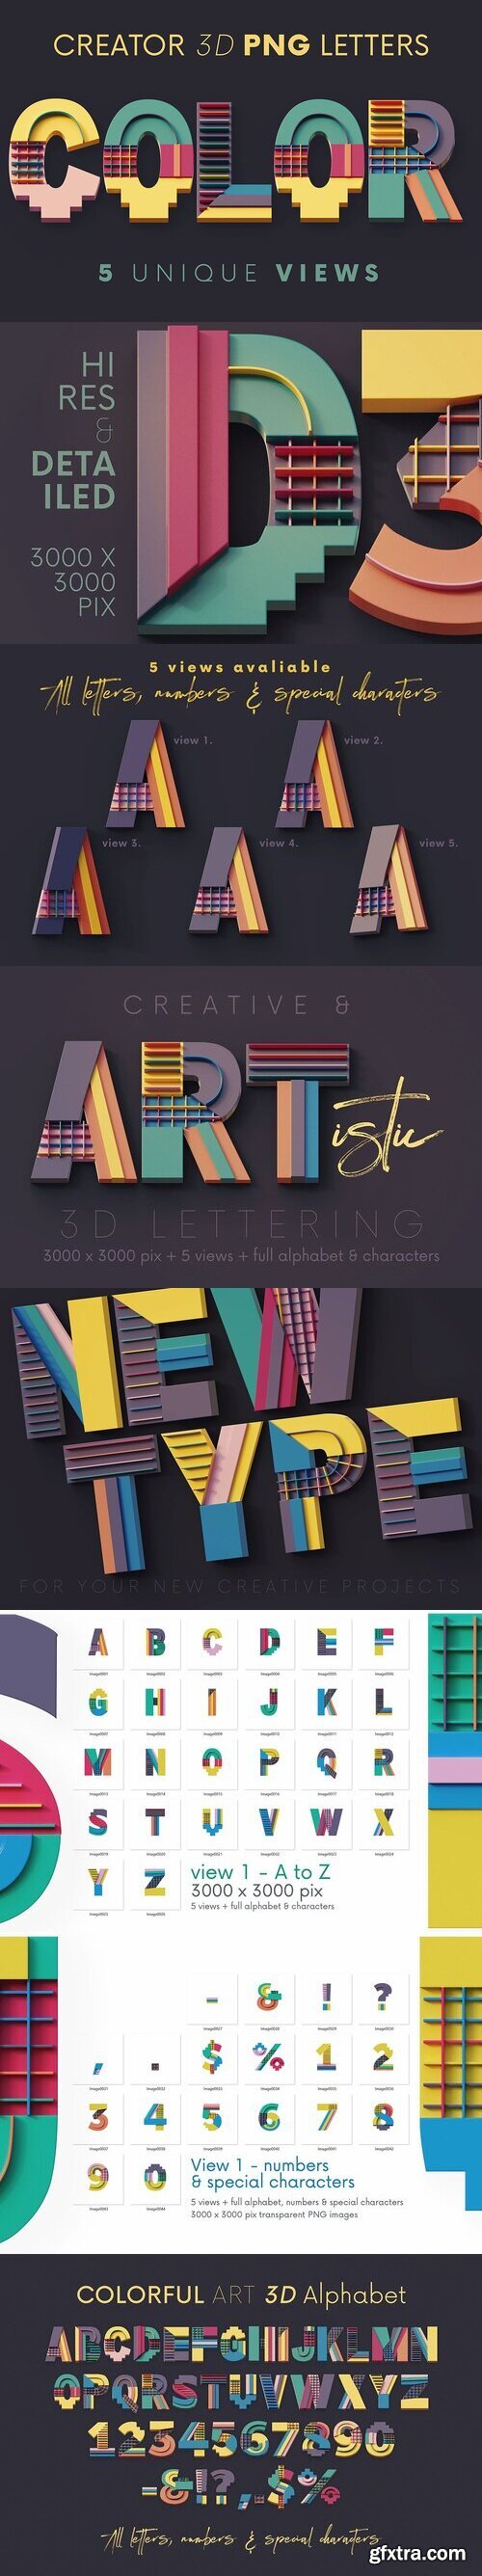 CreativeMarket - Colorful Art - 3D Lettering 10277665